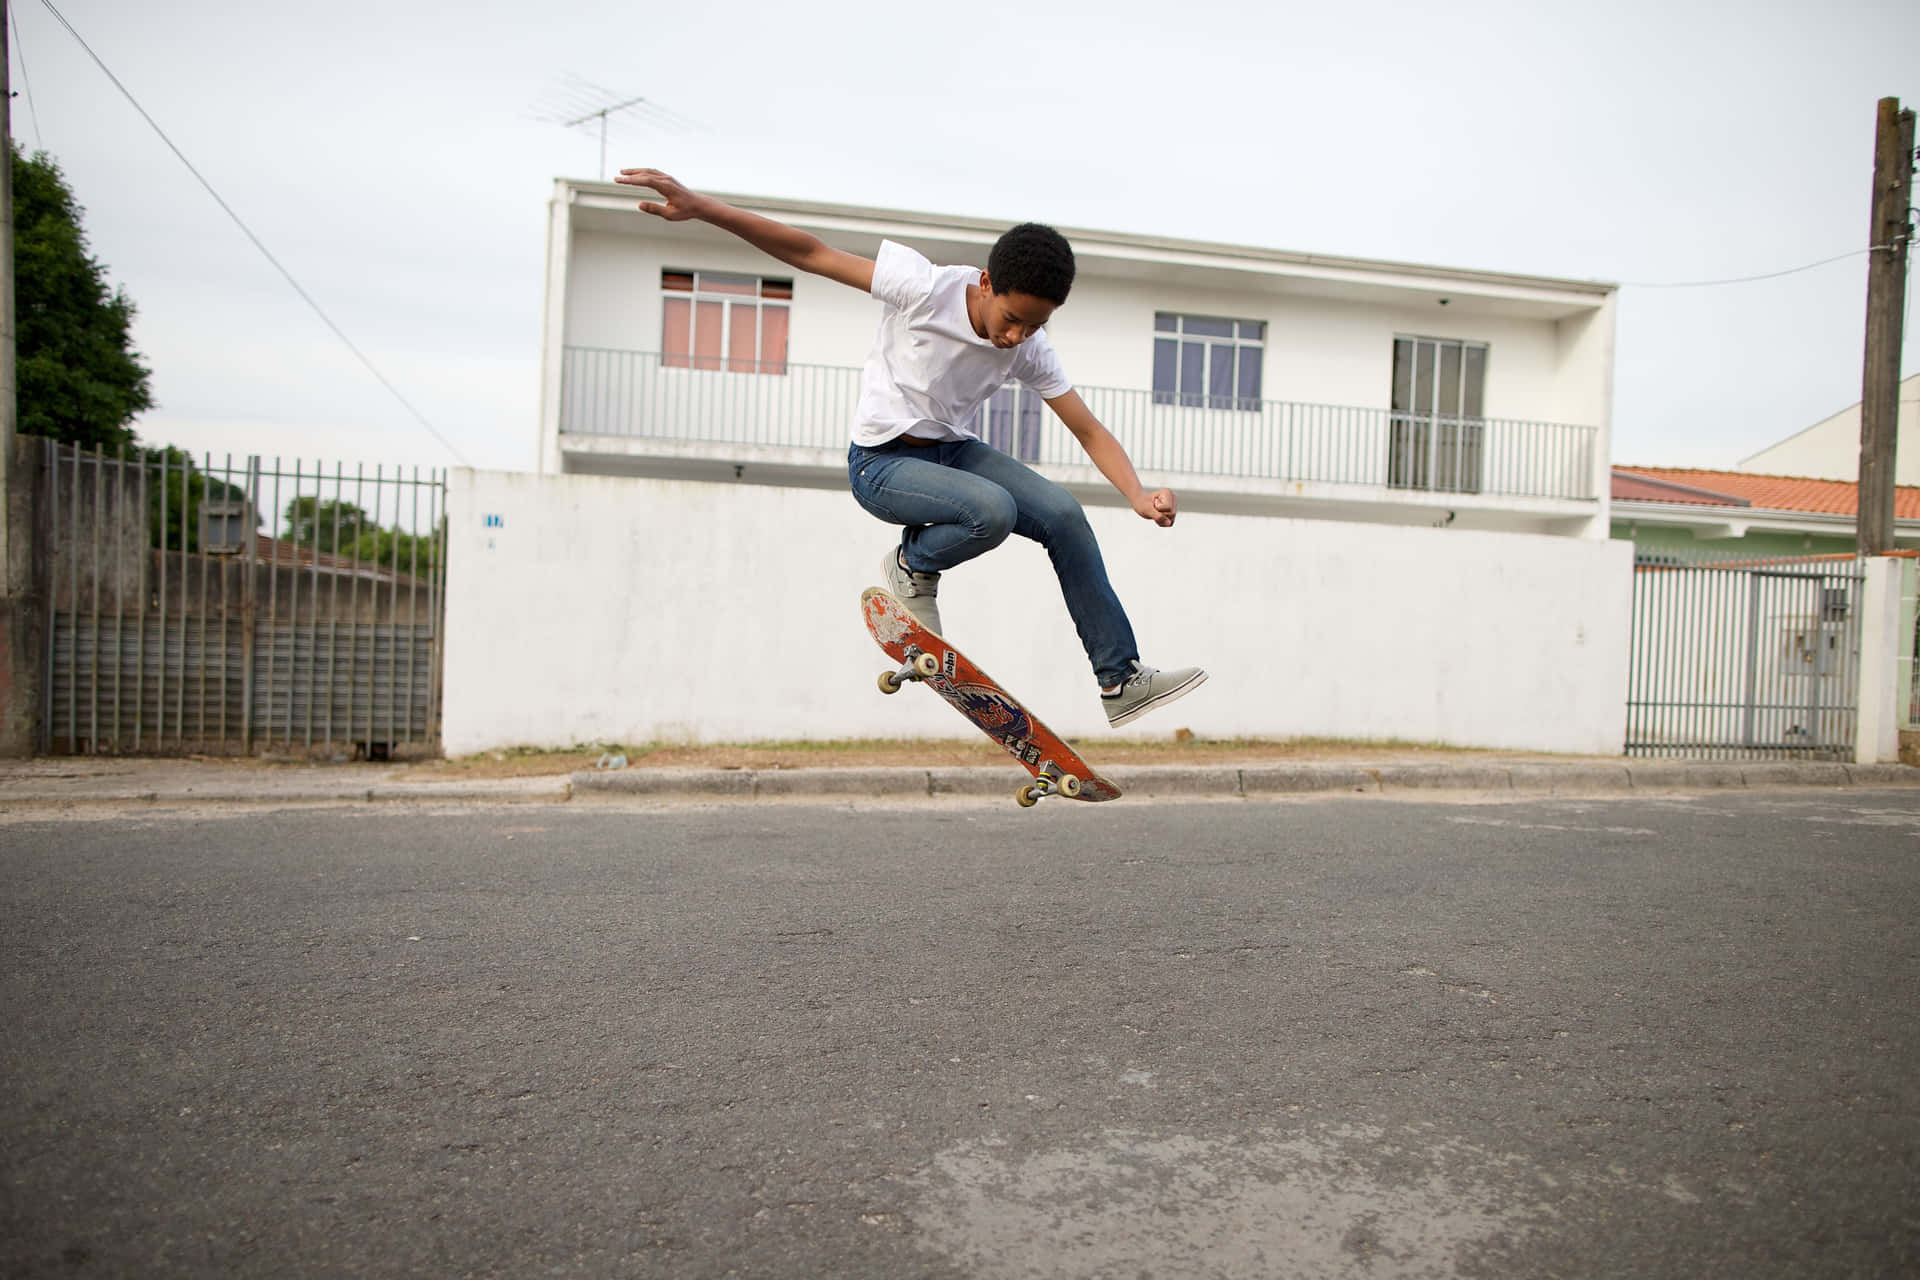 A Man Is Doing A Skateboard Trick